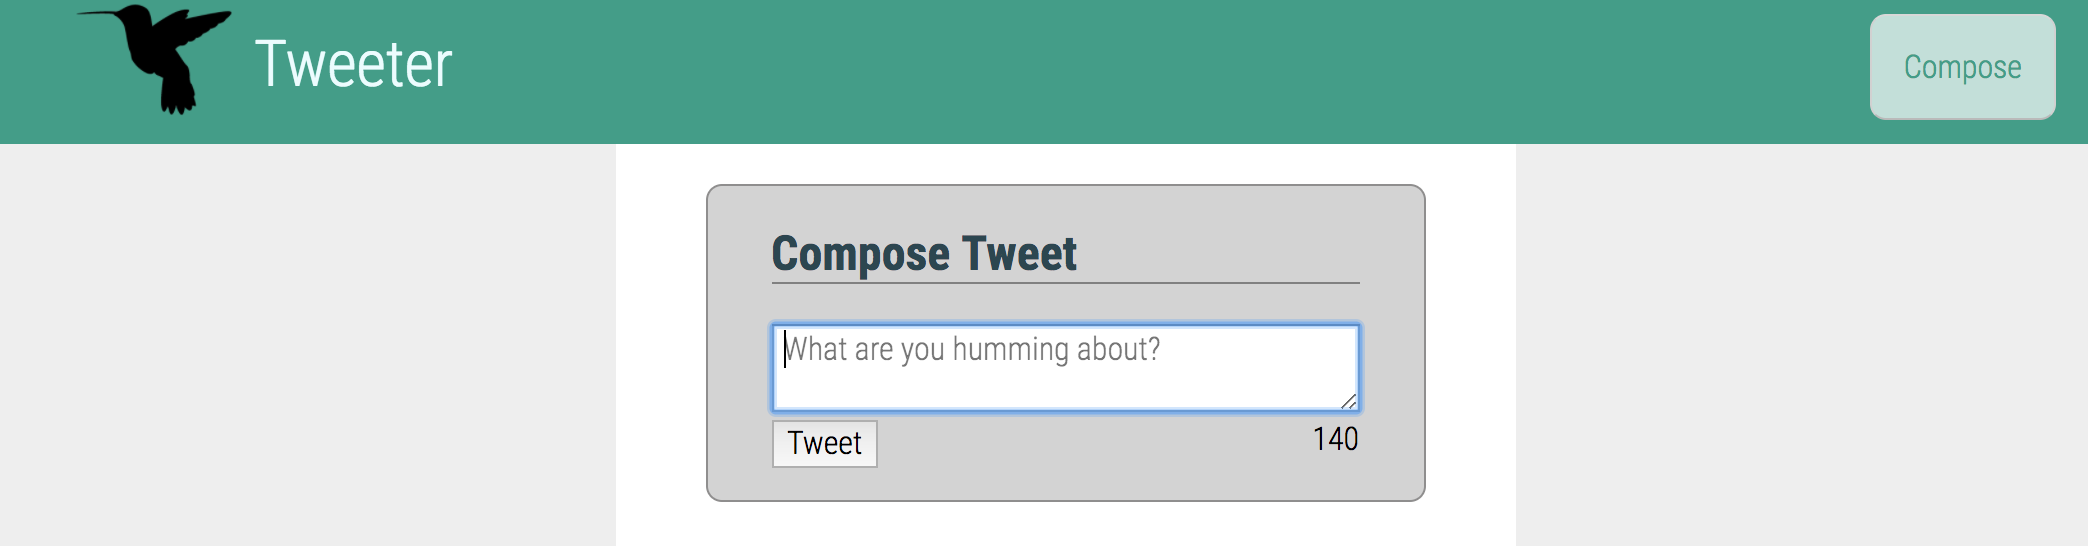 "Compose Tweet"